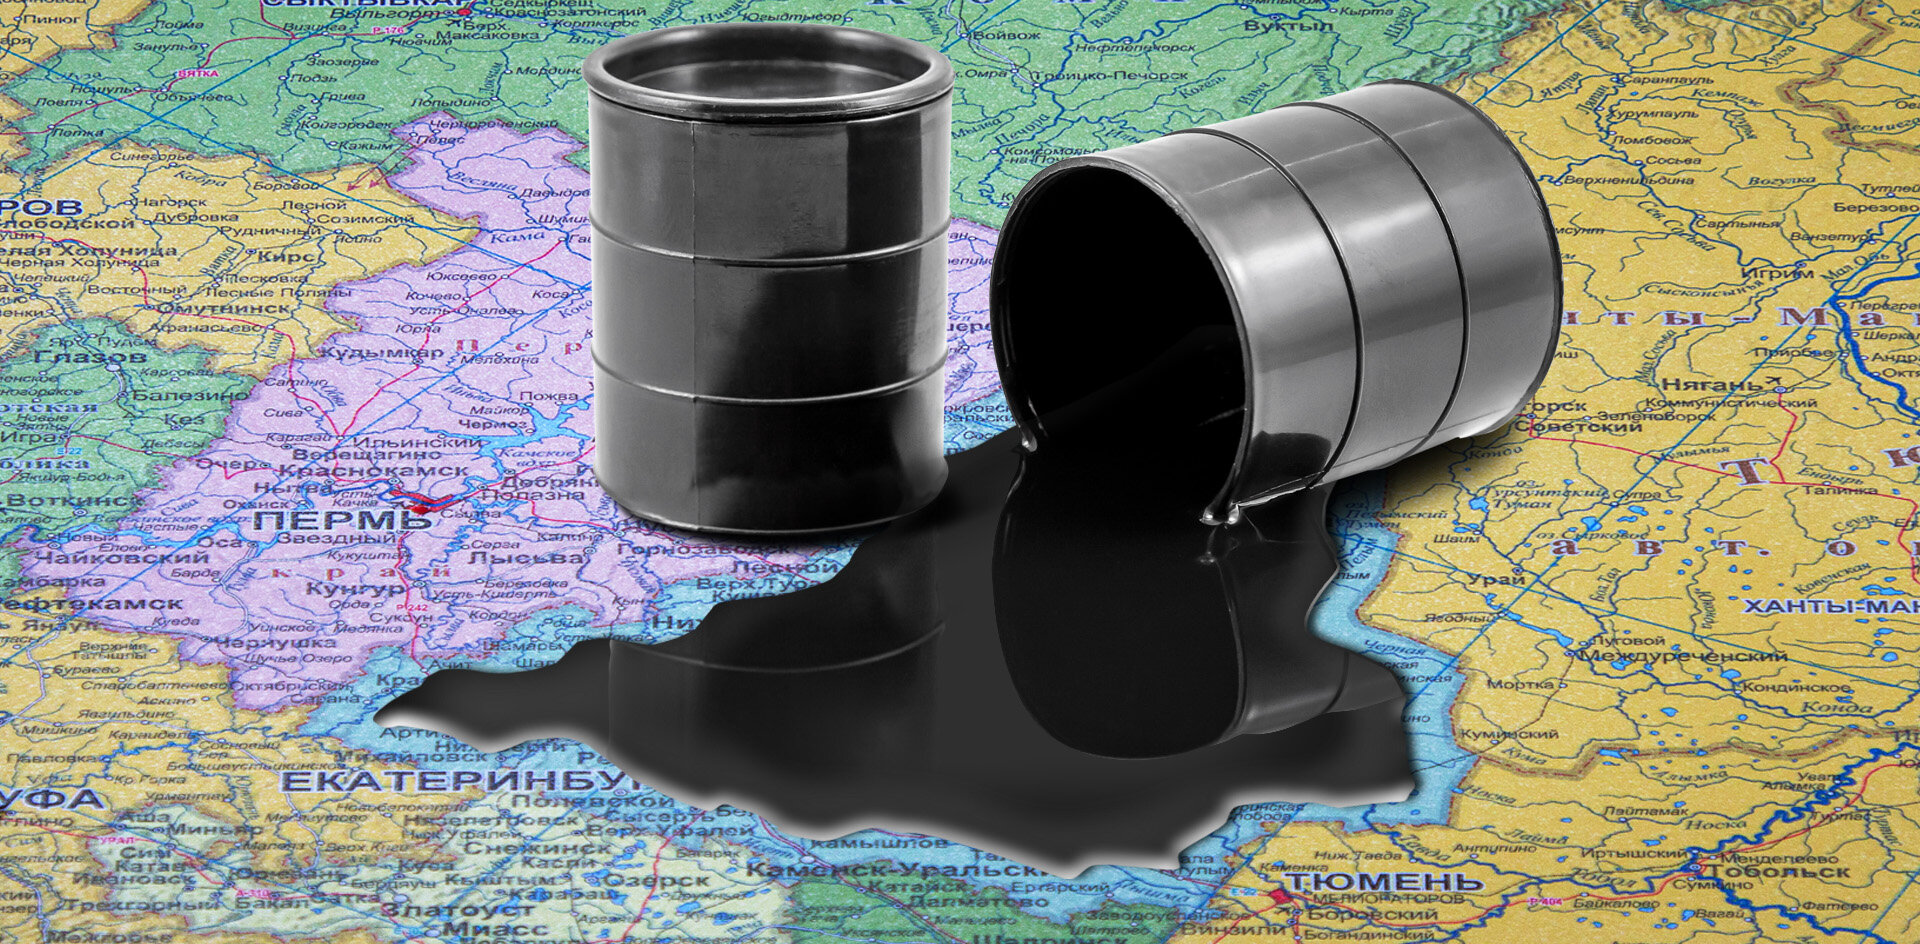 Свердловские власти жаждут нефти